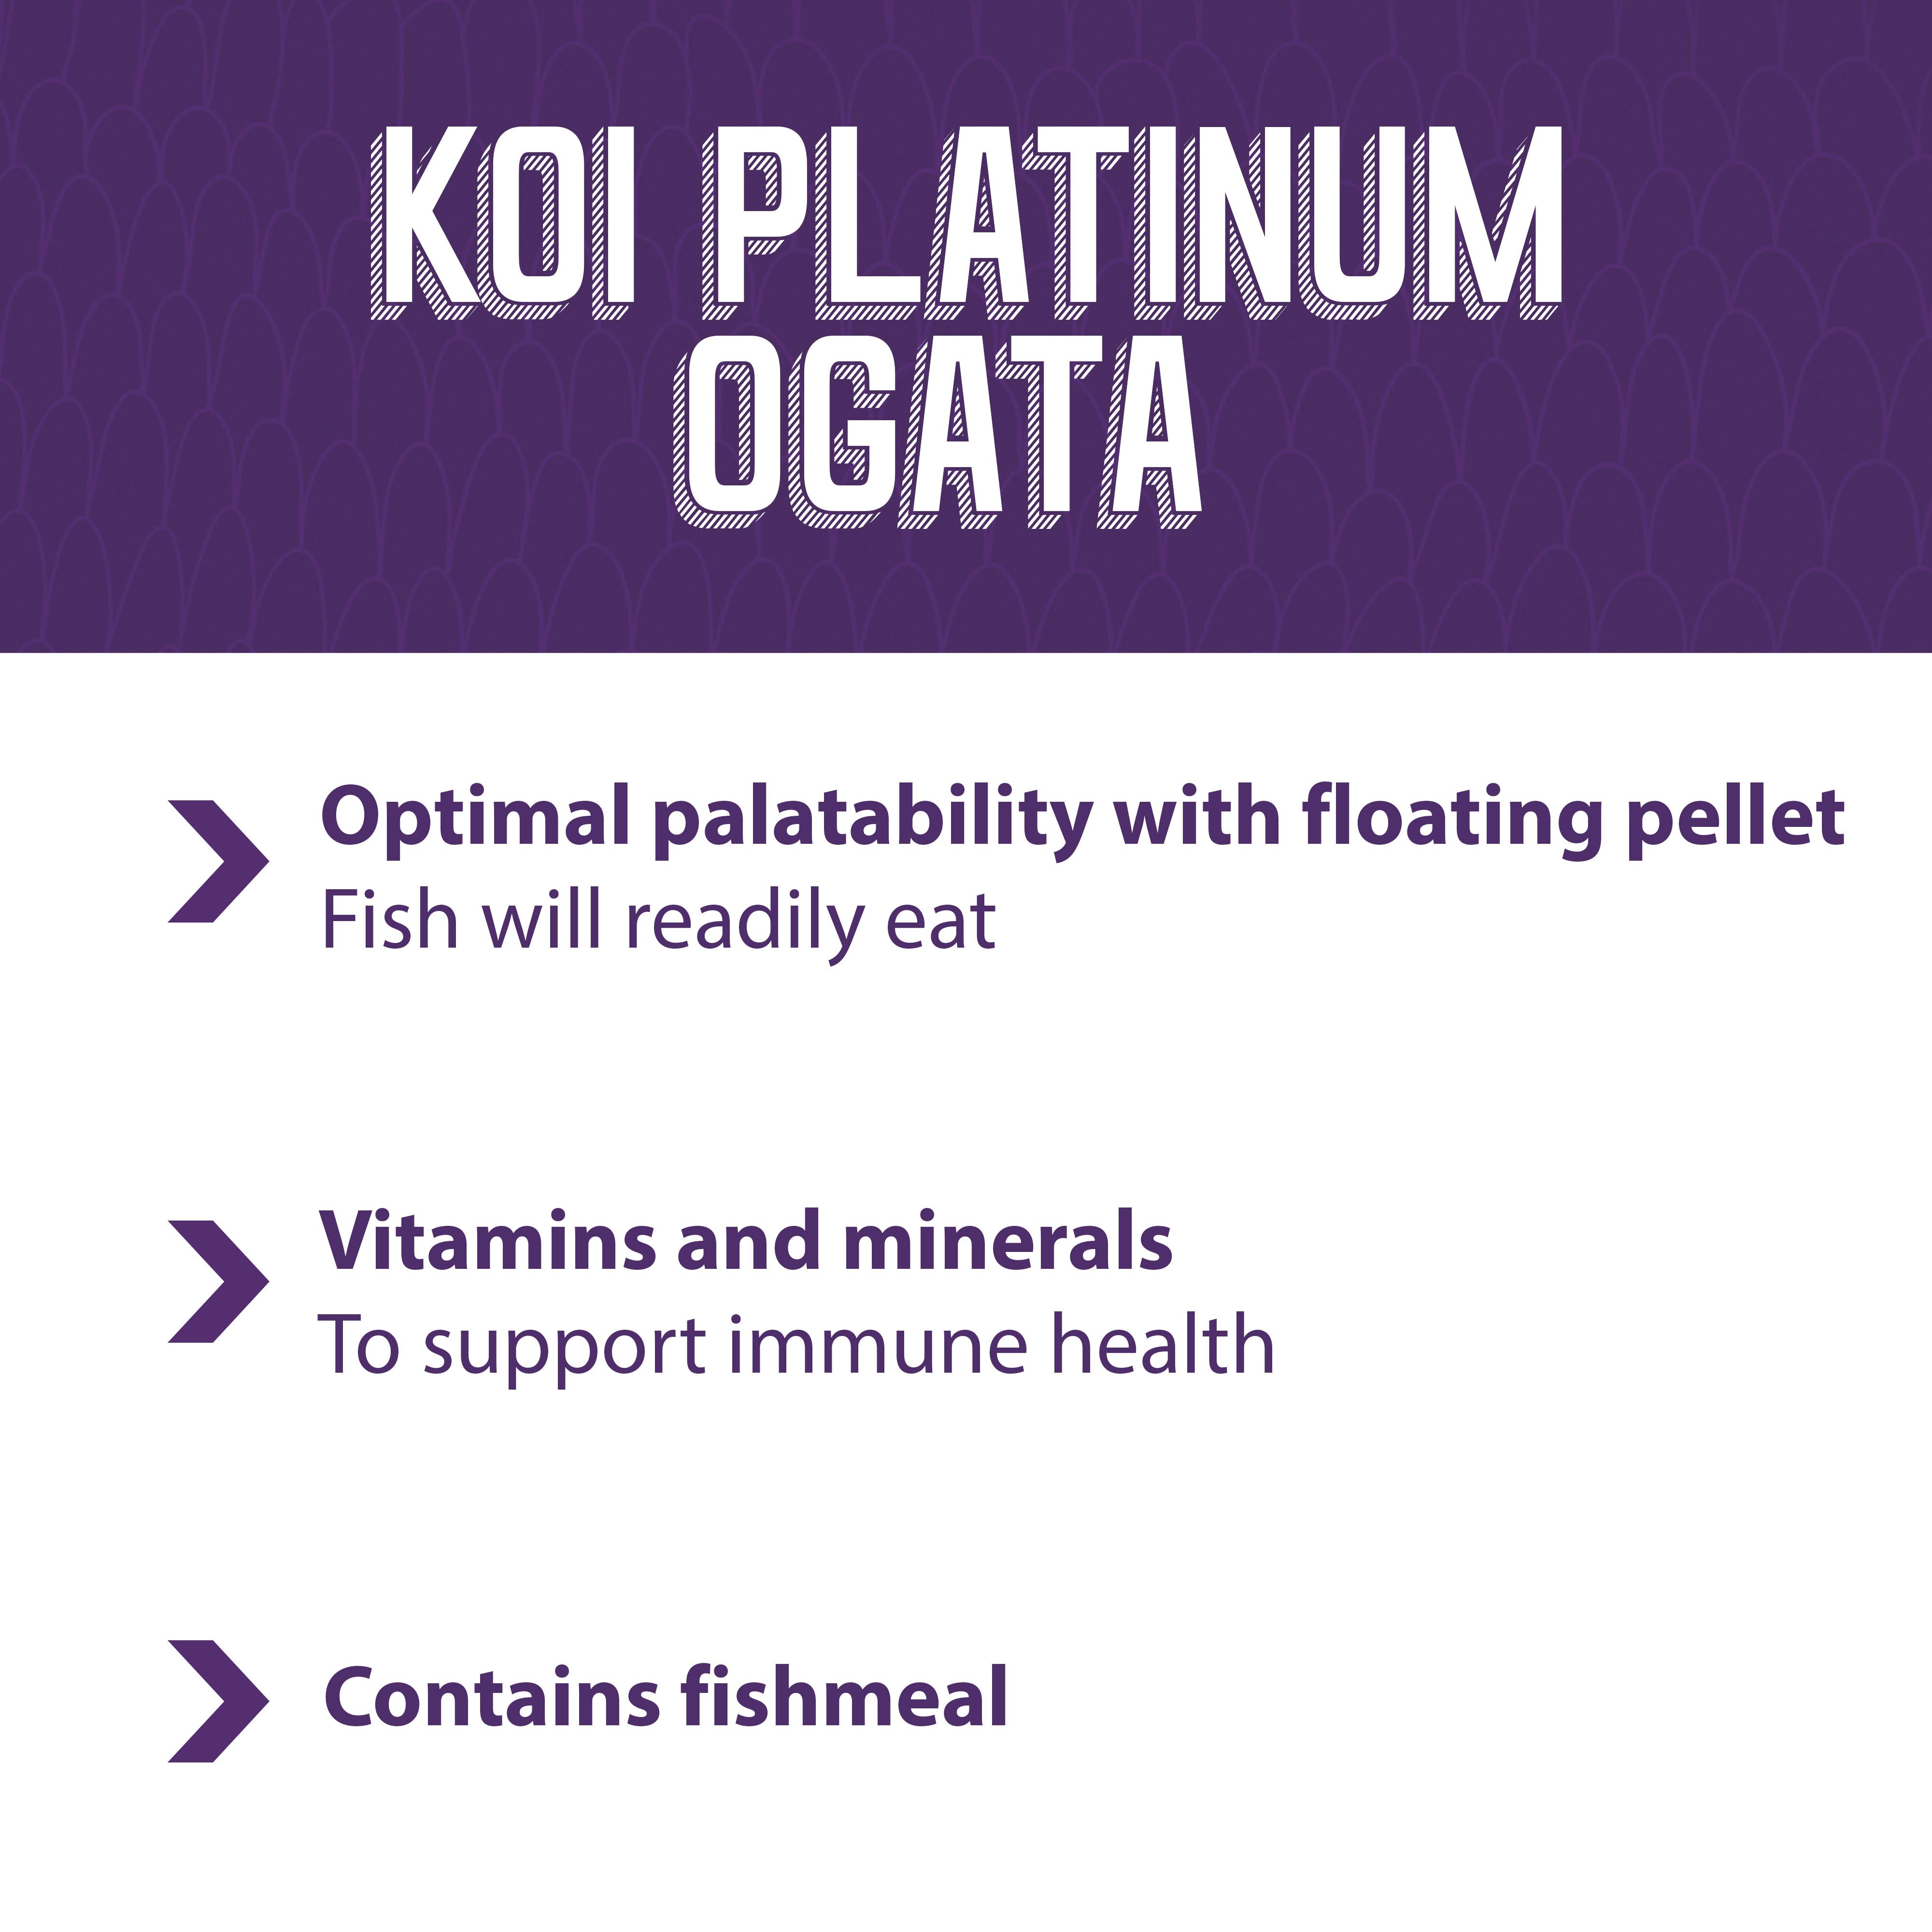 Koi Platinum Ogata contains fishmeal